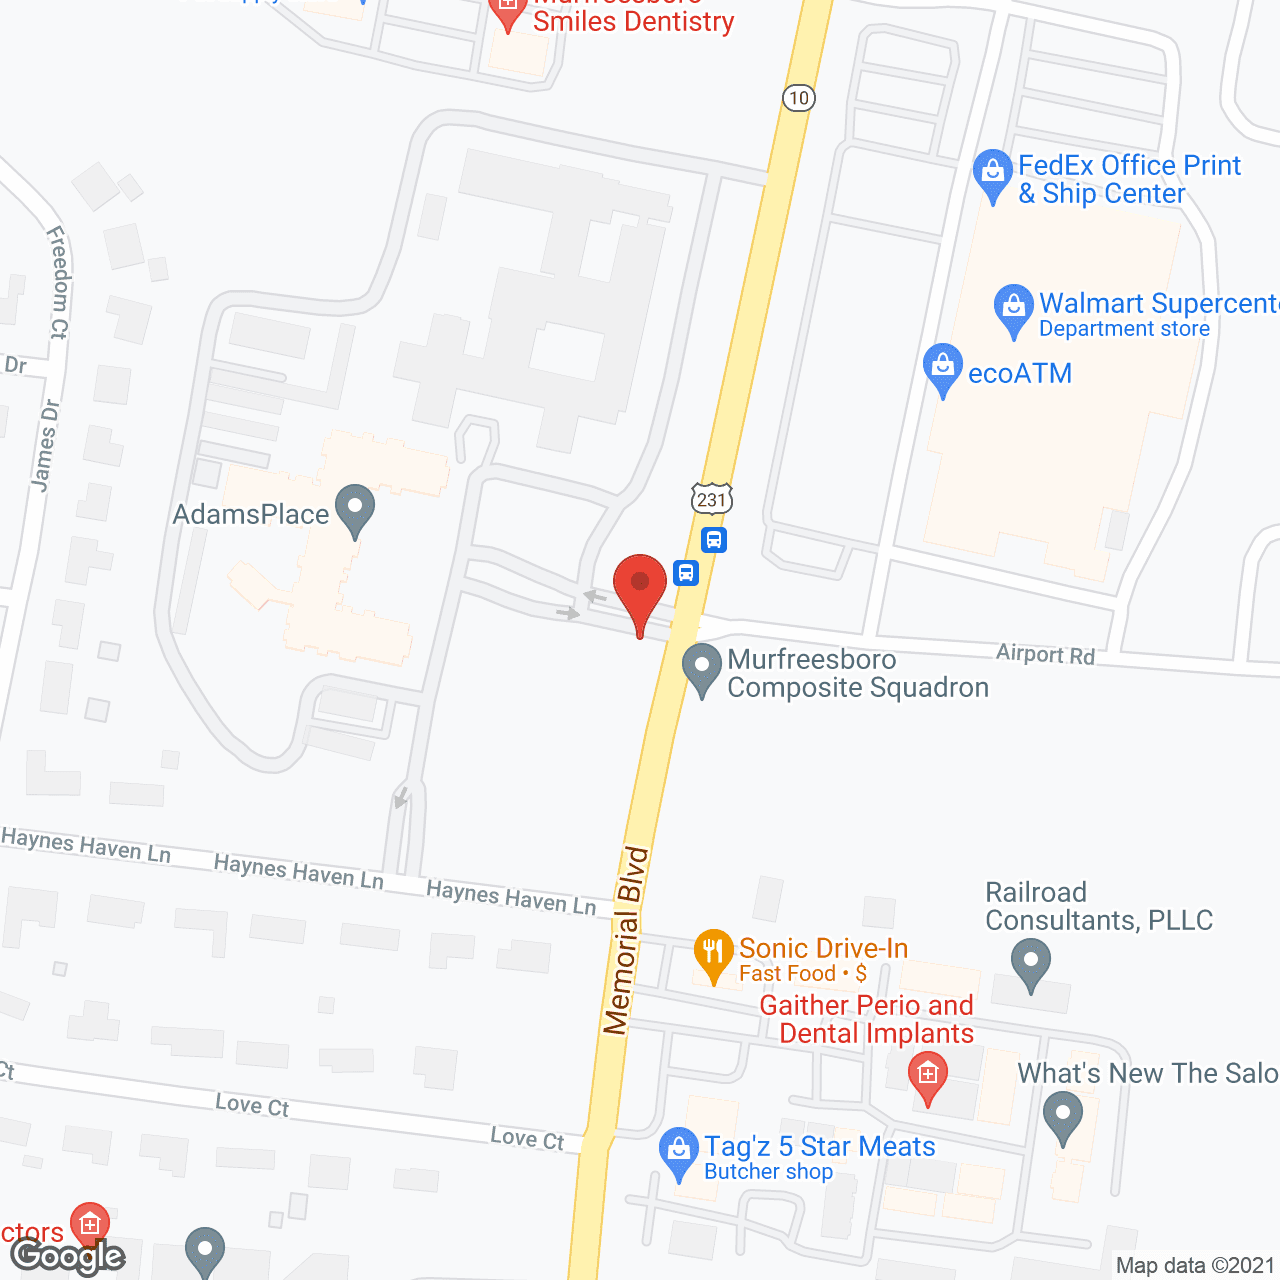 Adams Place Retirement Community in google map